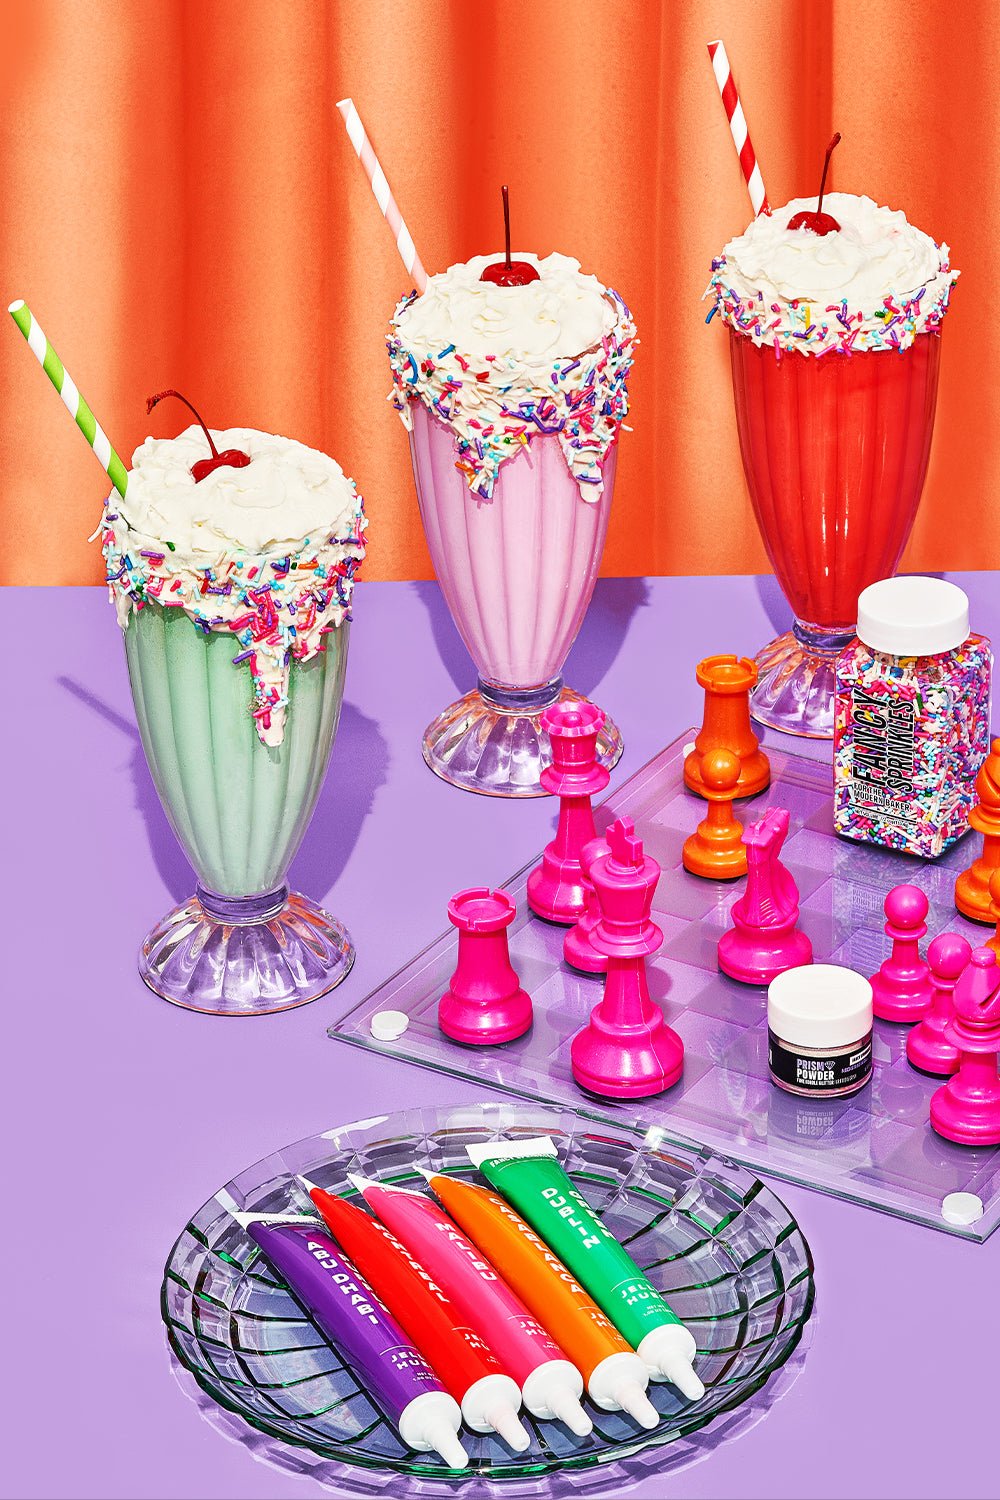 DIY make your own milkshake kit with mini milk bottle, marshmallows,  flavoured milk powders, candy, spoons etc